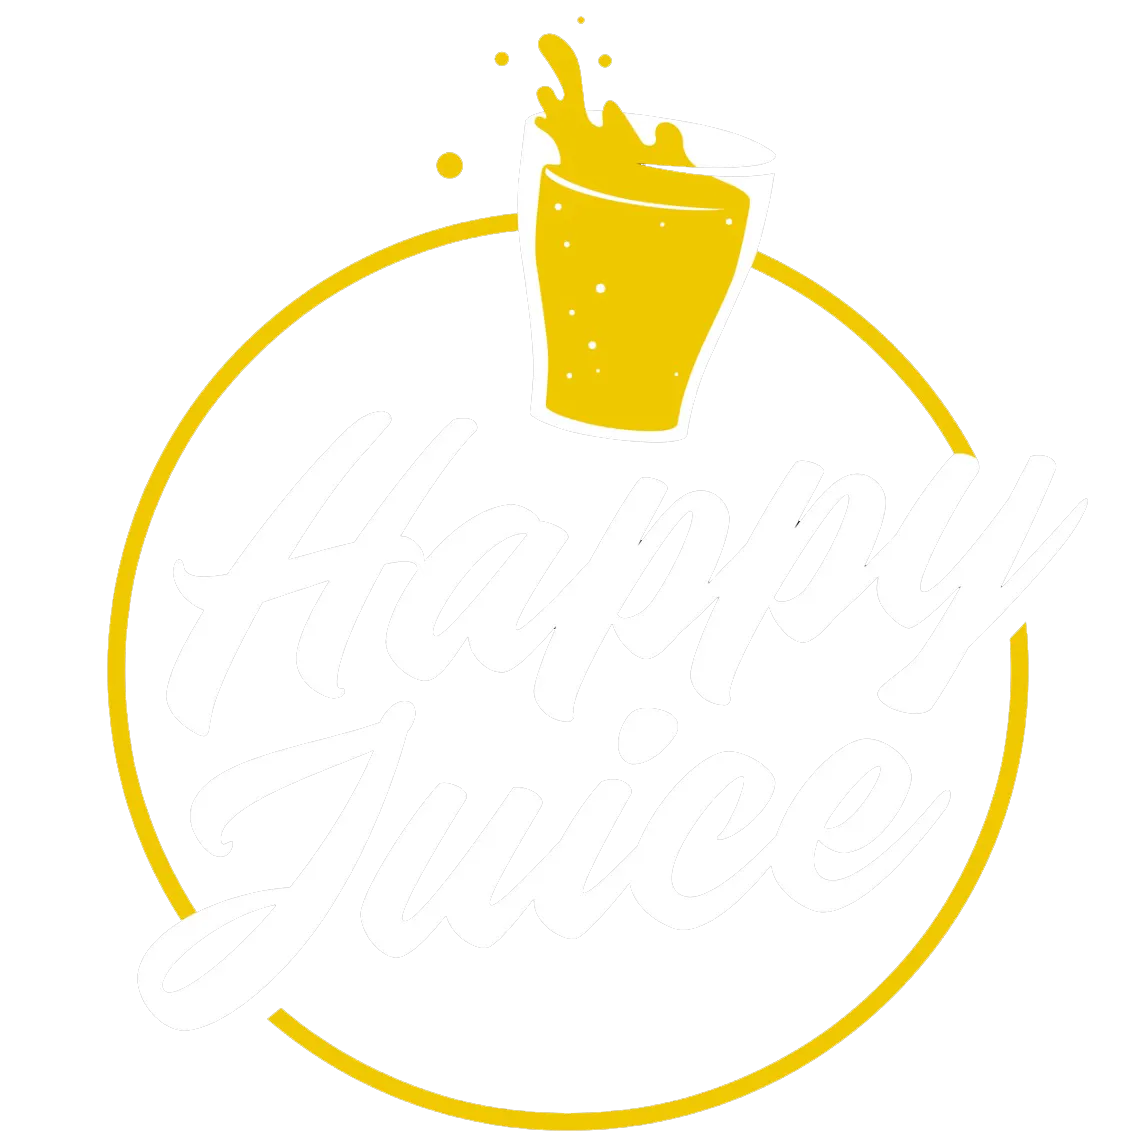 Happyjuice.eu logo